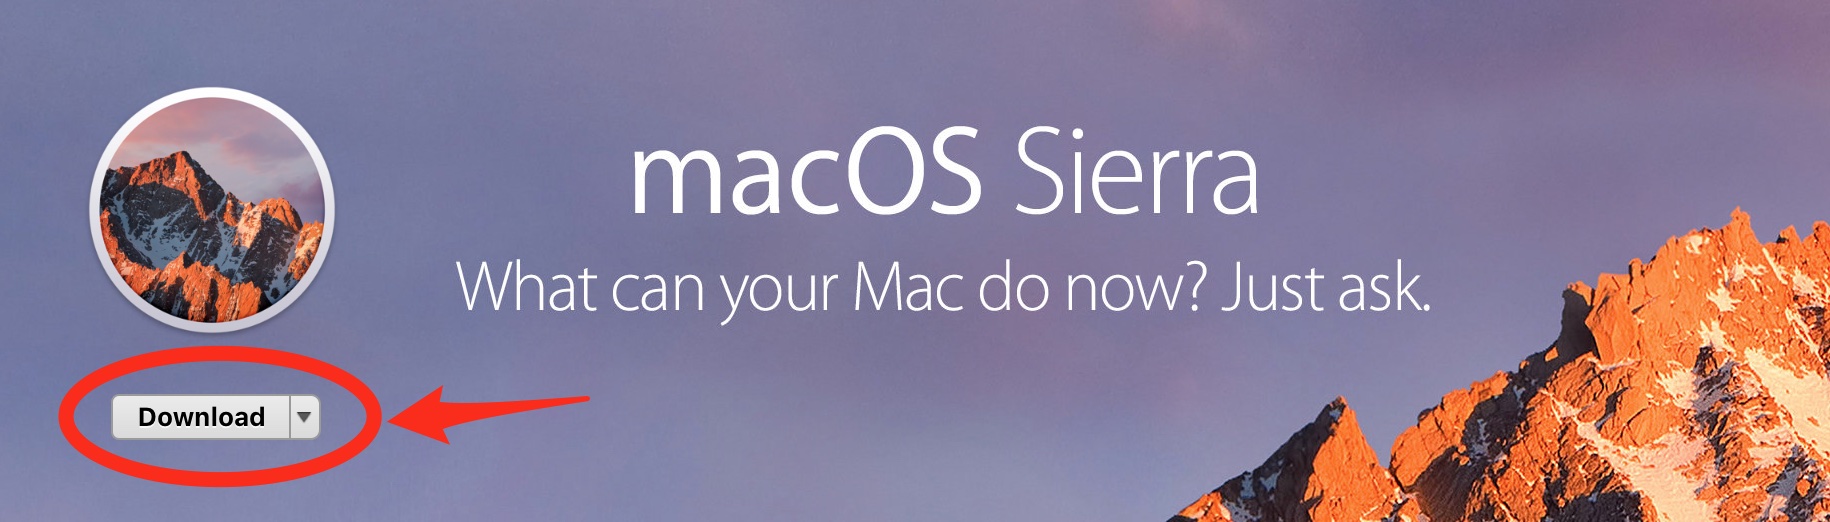 Mac Version 10.12 Download Where